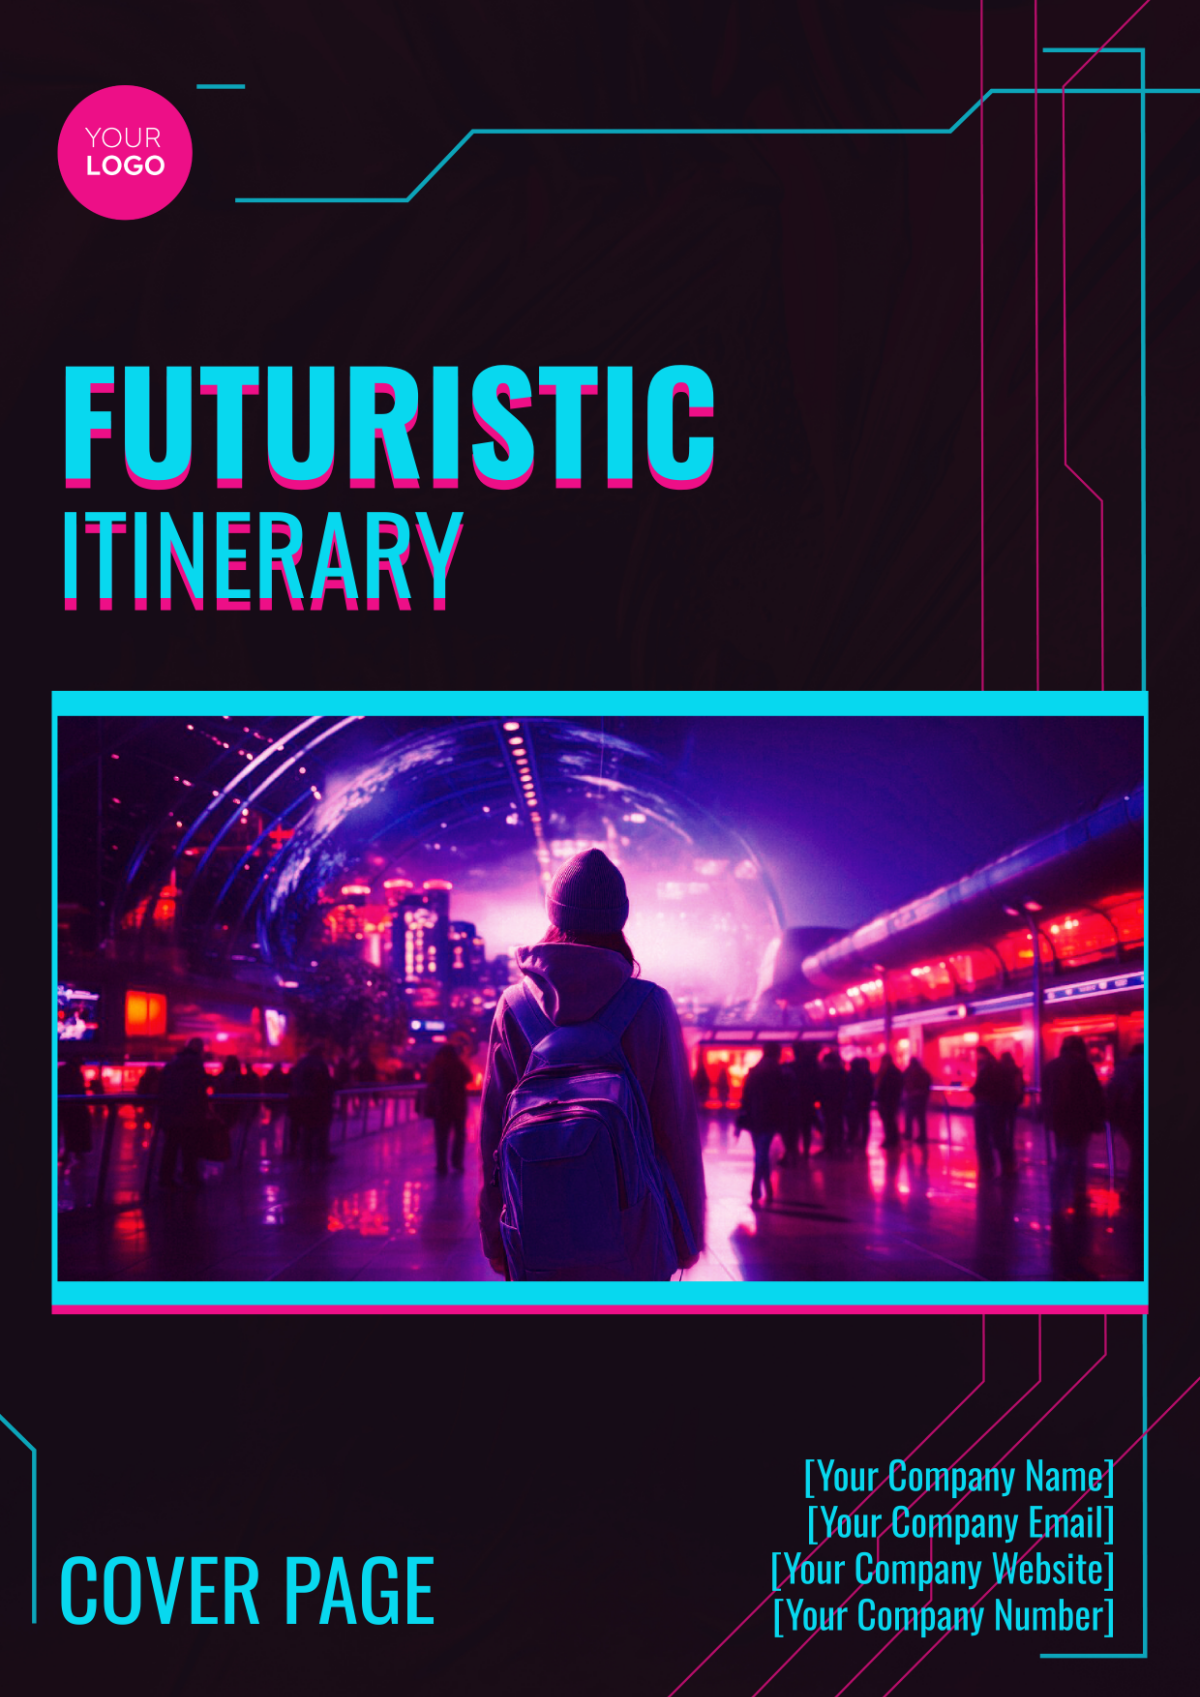 Futuristic Itinerary Cover Page